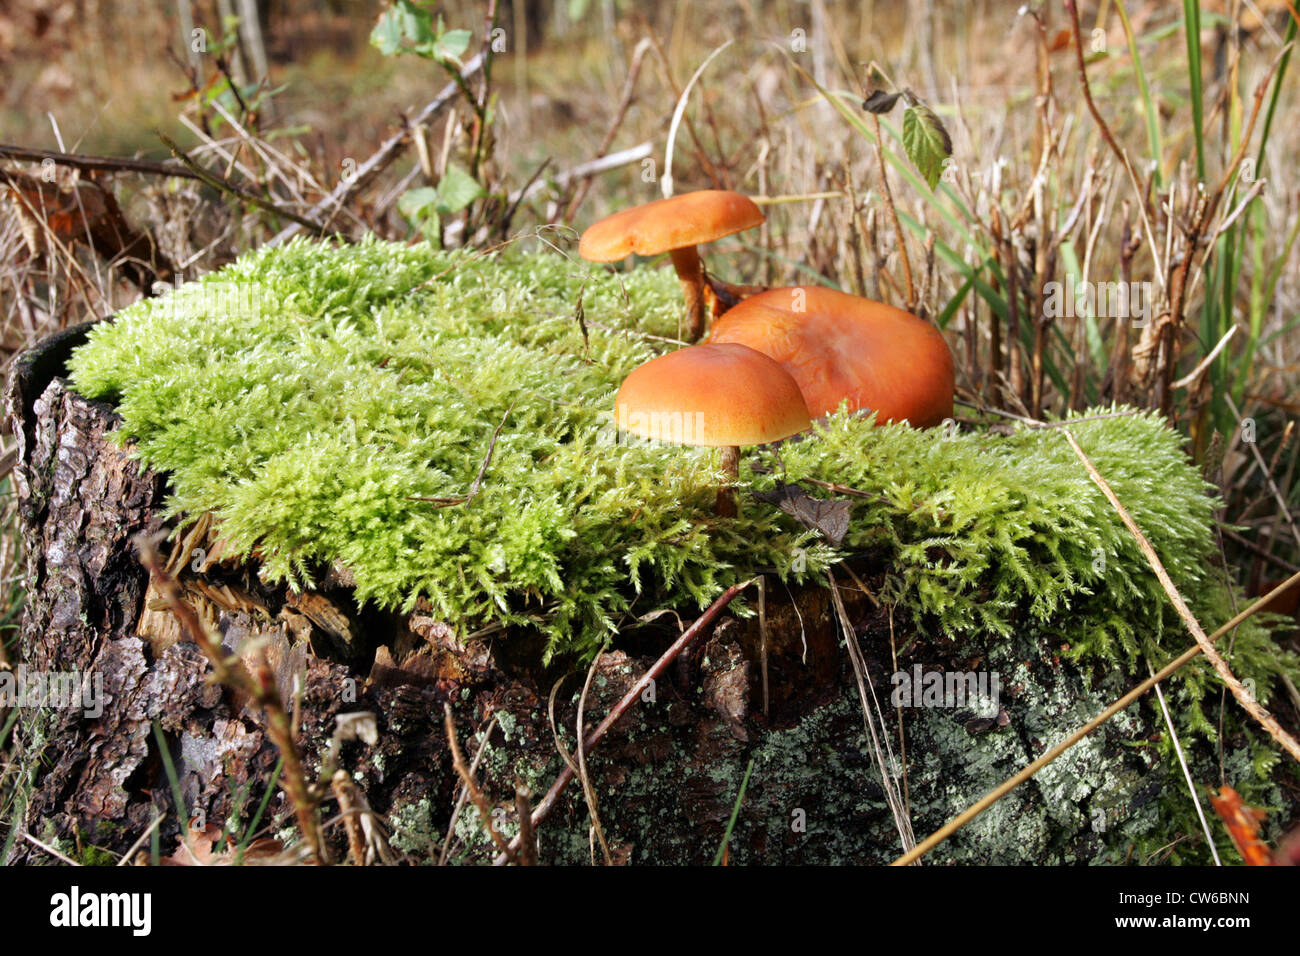 Zingst, mushrooms on a tree stump Stock Photo